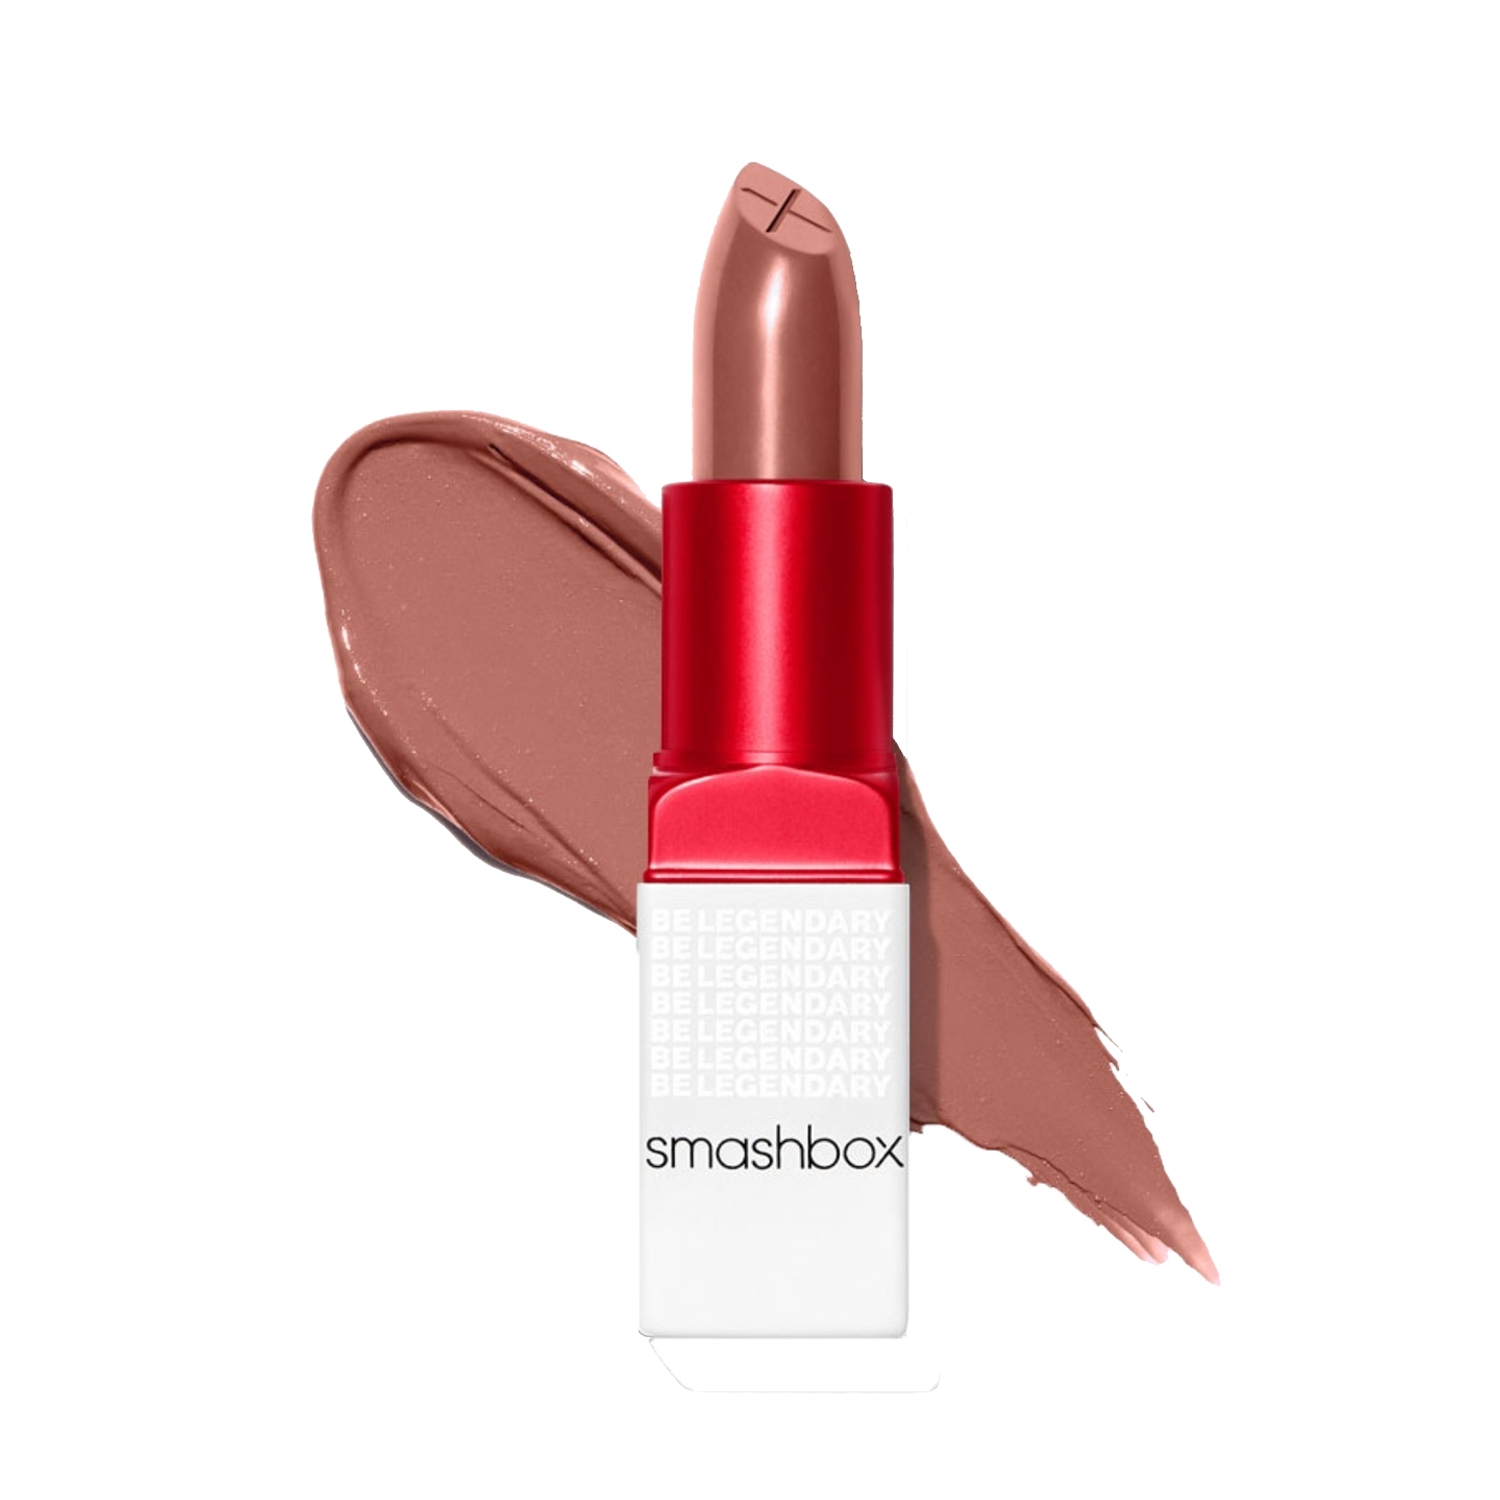 Smashbox | Smashbox Be Legendary Prime & Plush Lipstick - Rich Nude (3.4g)